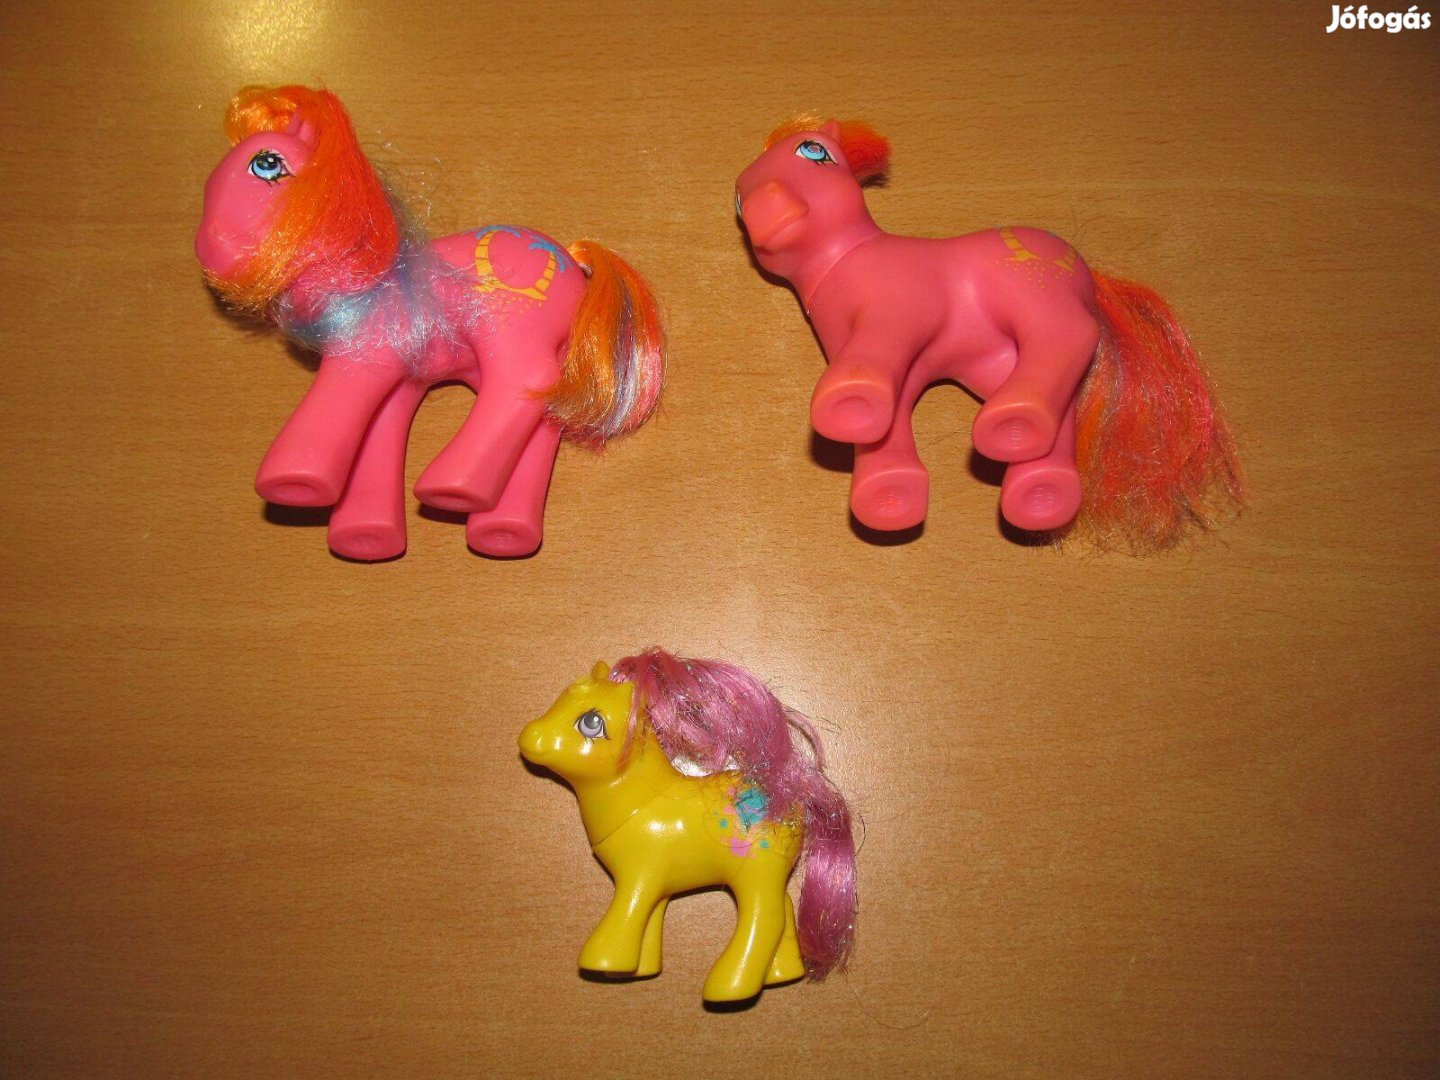 Régi g1 My little pony / Én kicsi pónim figura kupac